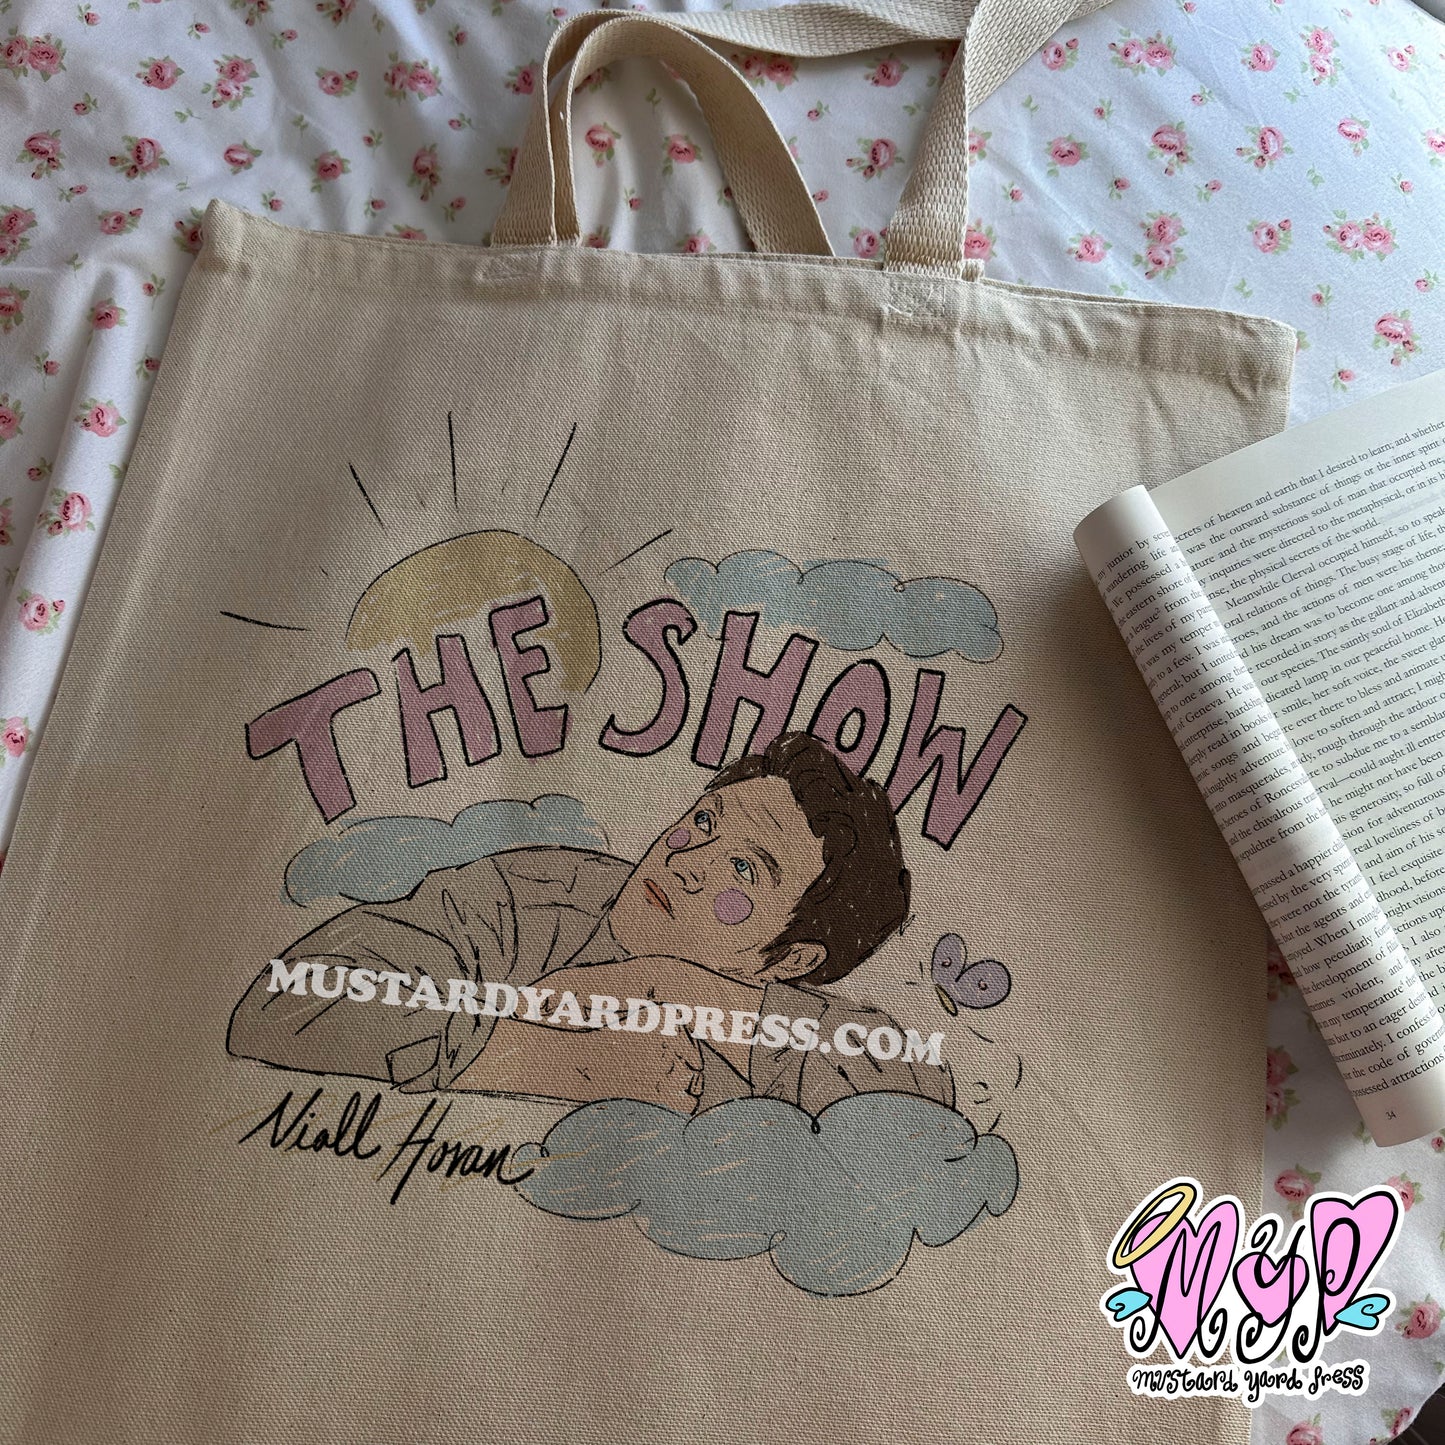 show sketch tote bag